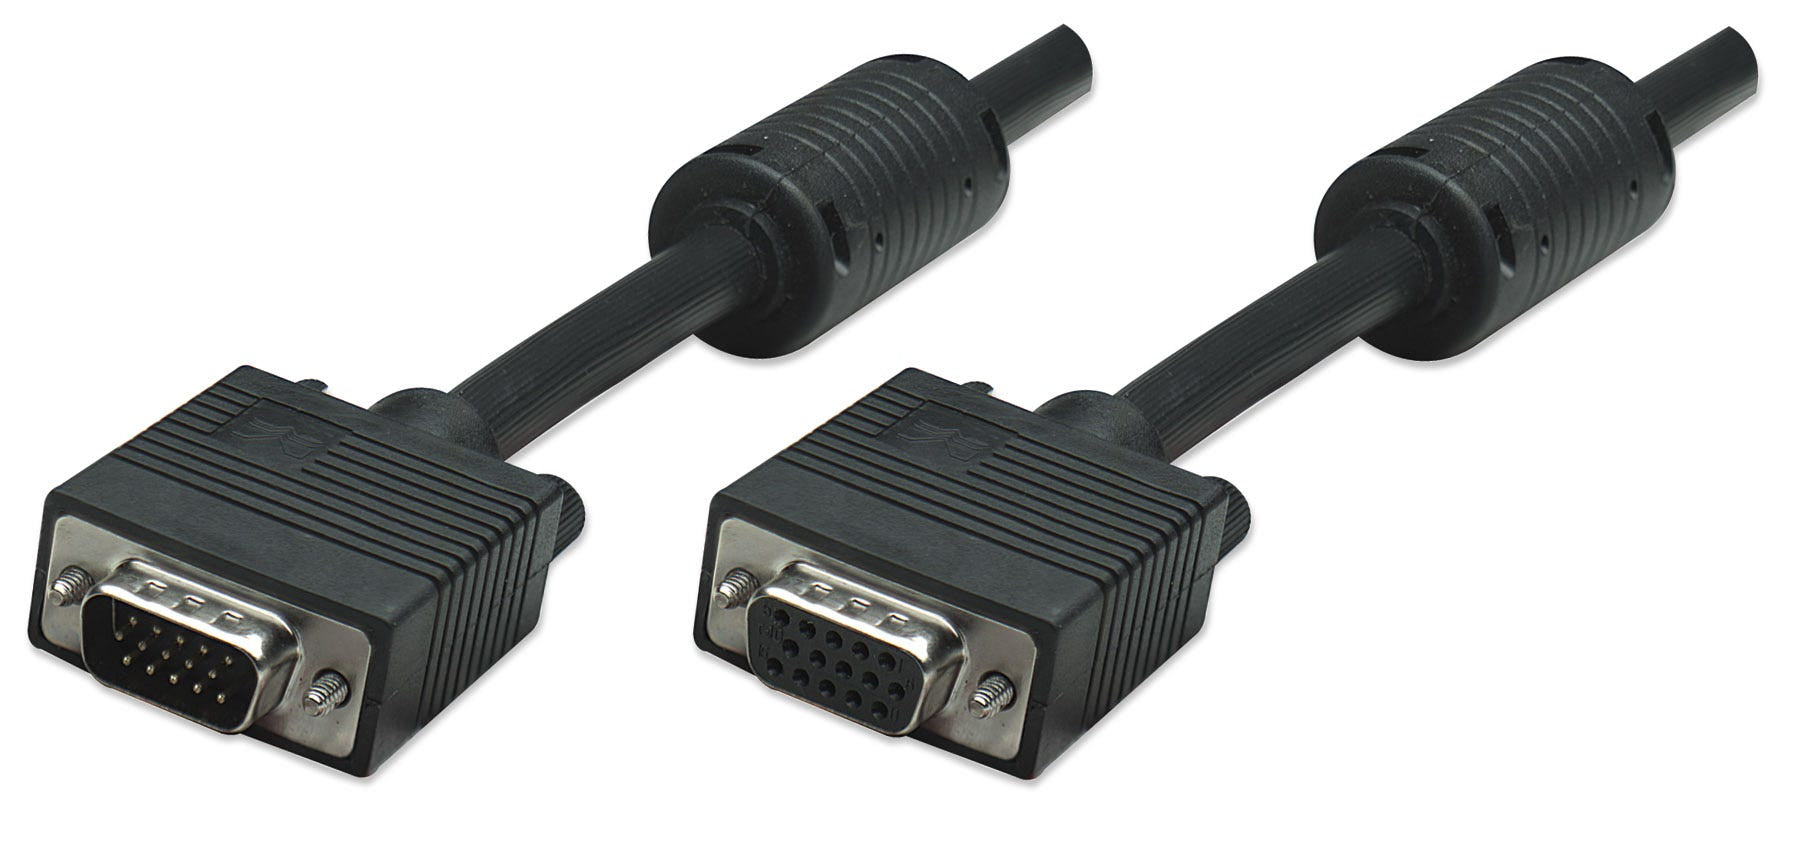 15m Coax Monitor VGA Extension Cable - Cables VGA